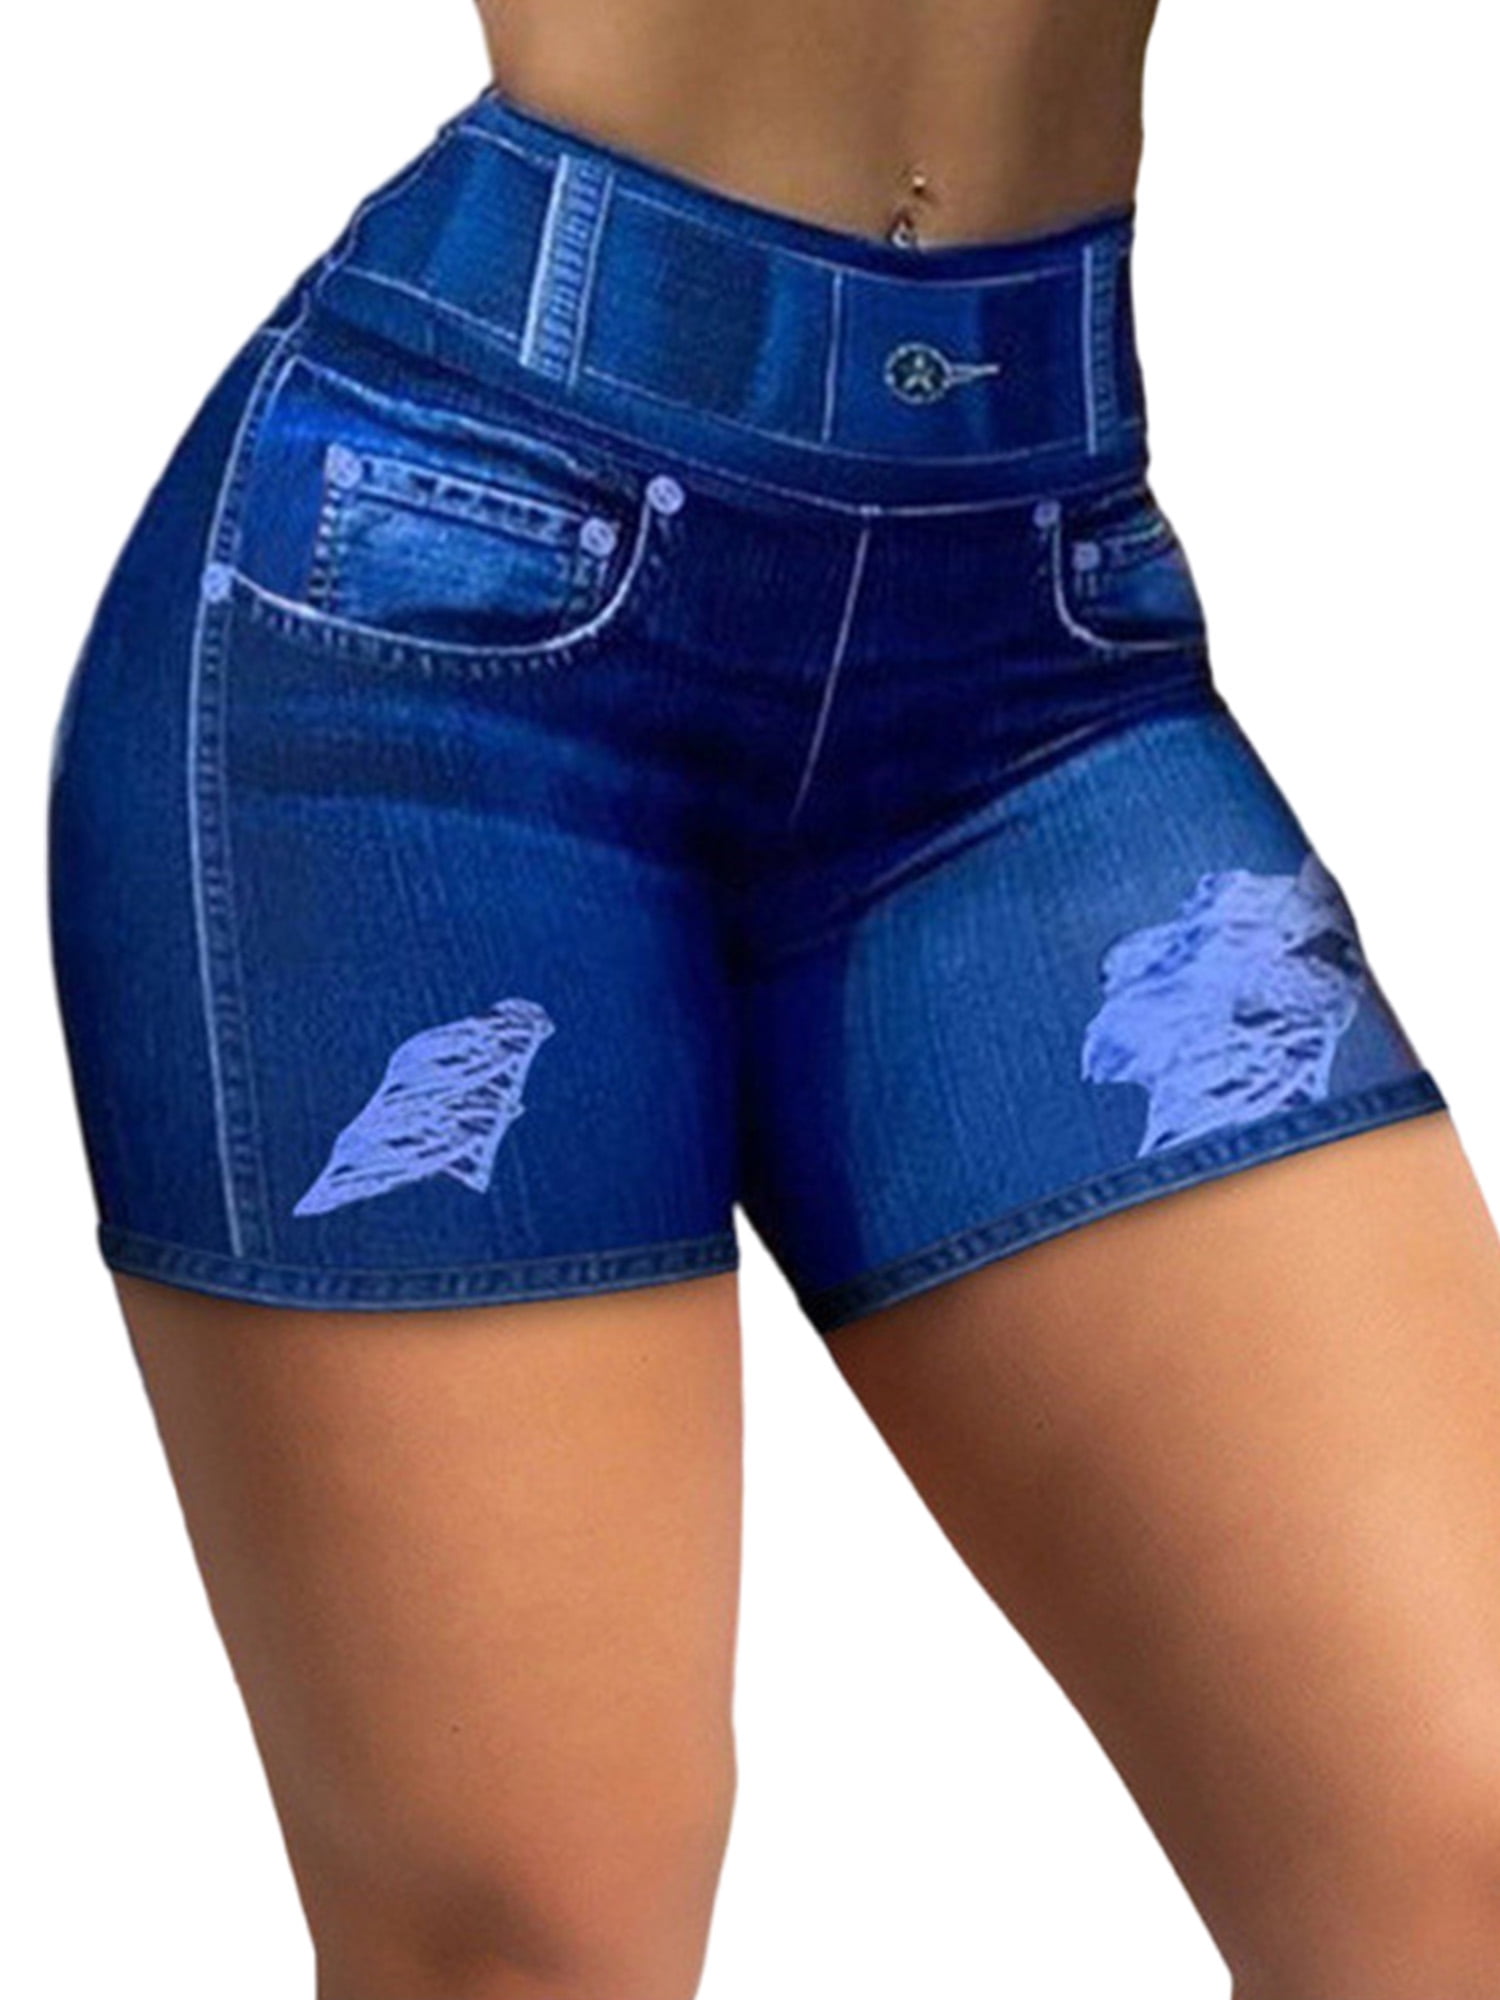 Frontwalk Short Trousers for Women Stretch Denim Jeans Shorts